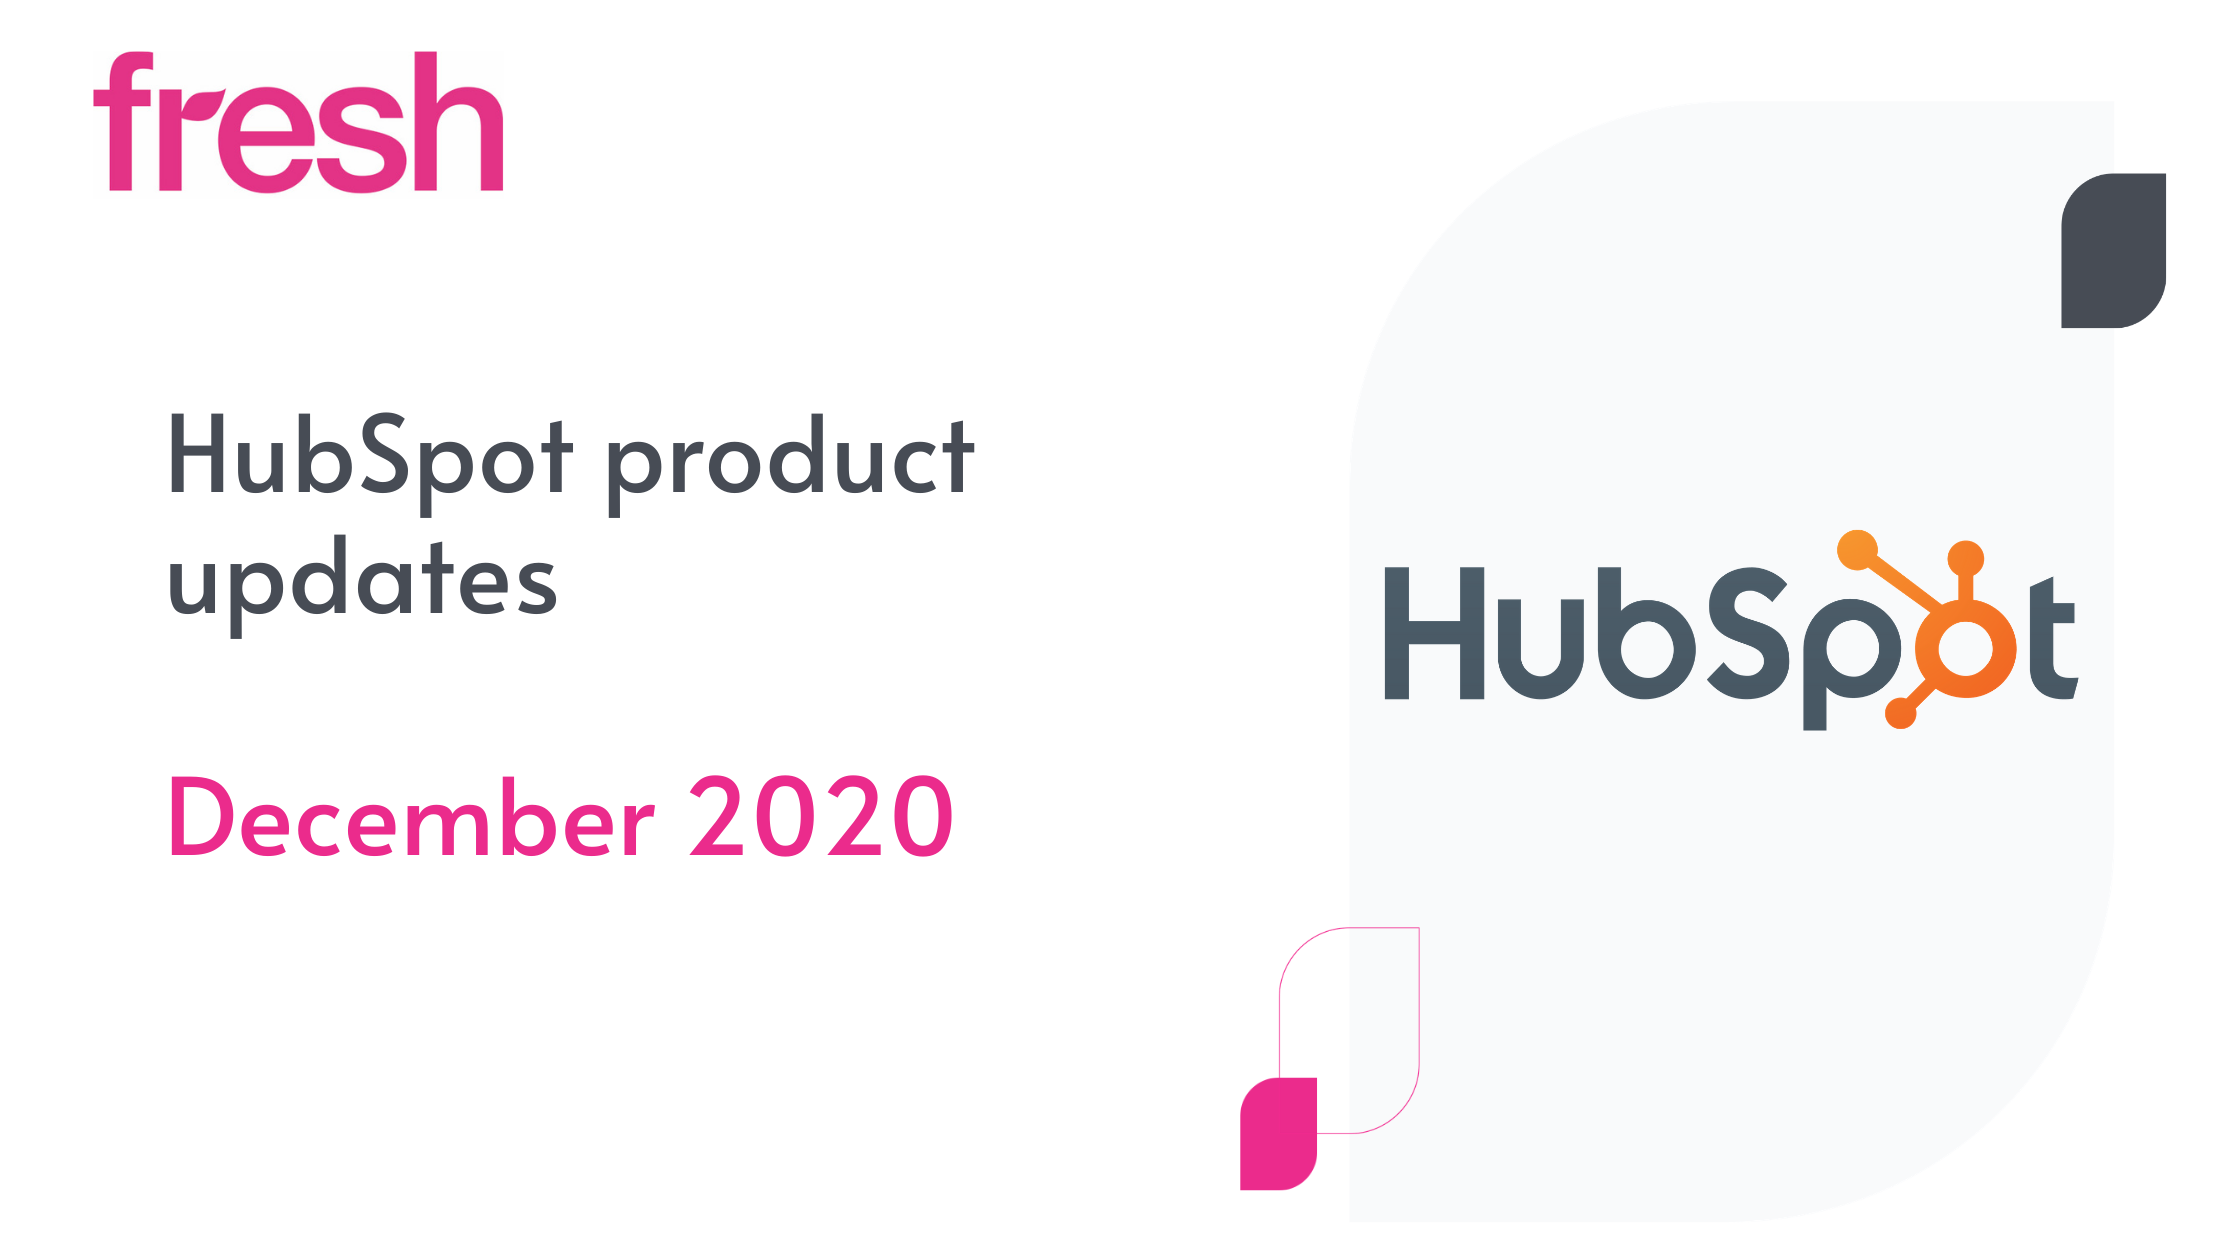 HubSpot product updates December 2020